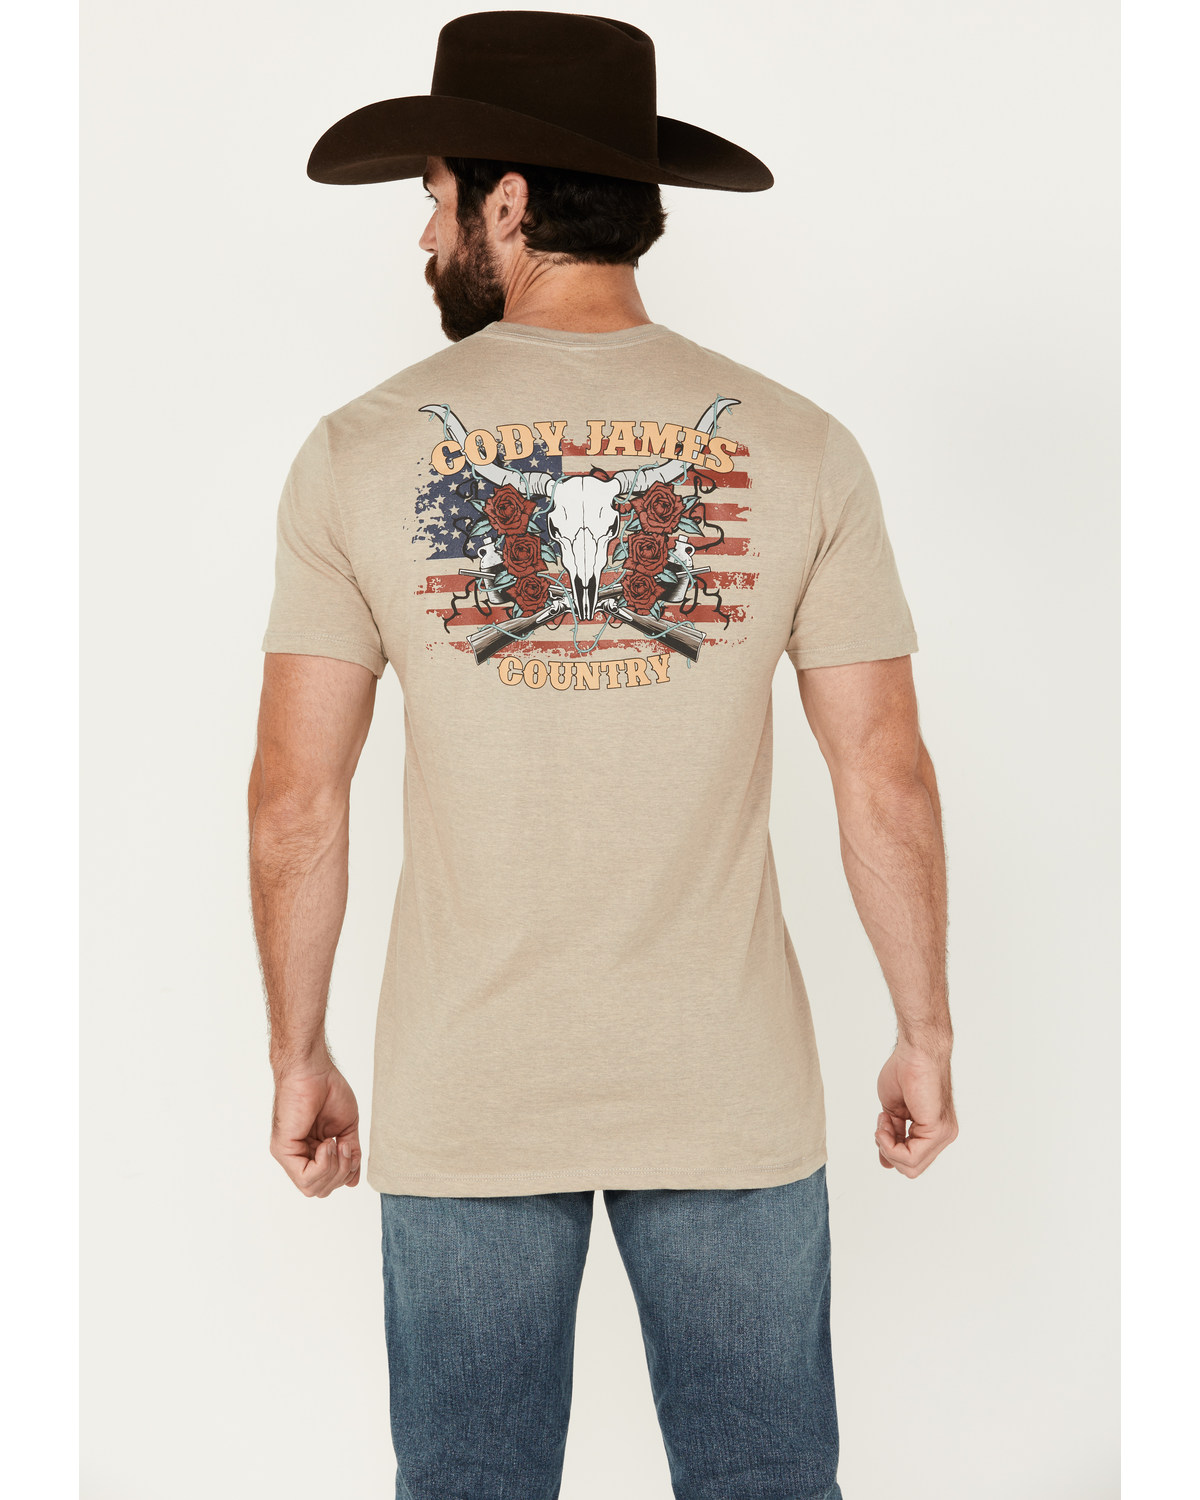 Cody James Men's Skull and Roses Short Sleeve Graphic T-Shirt